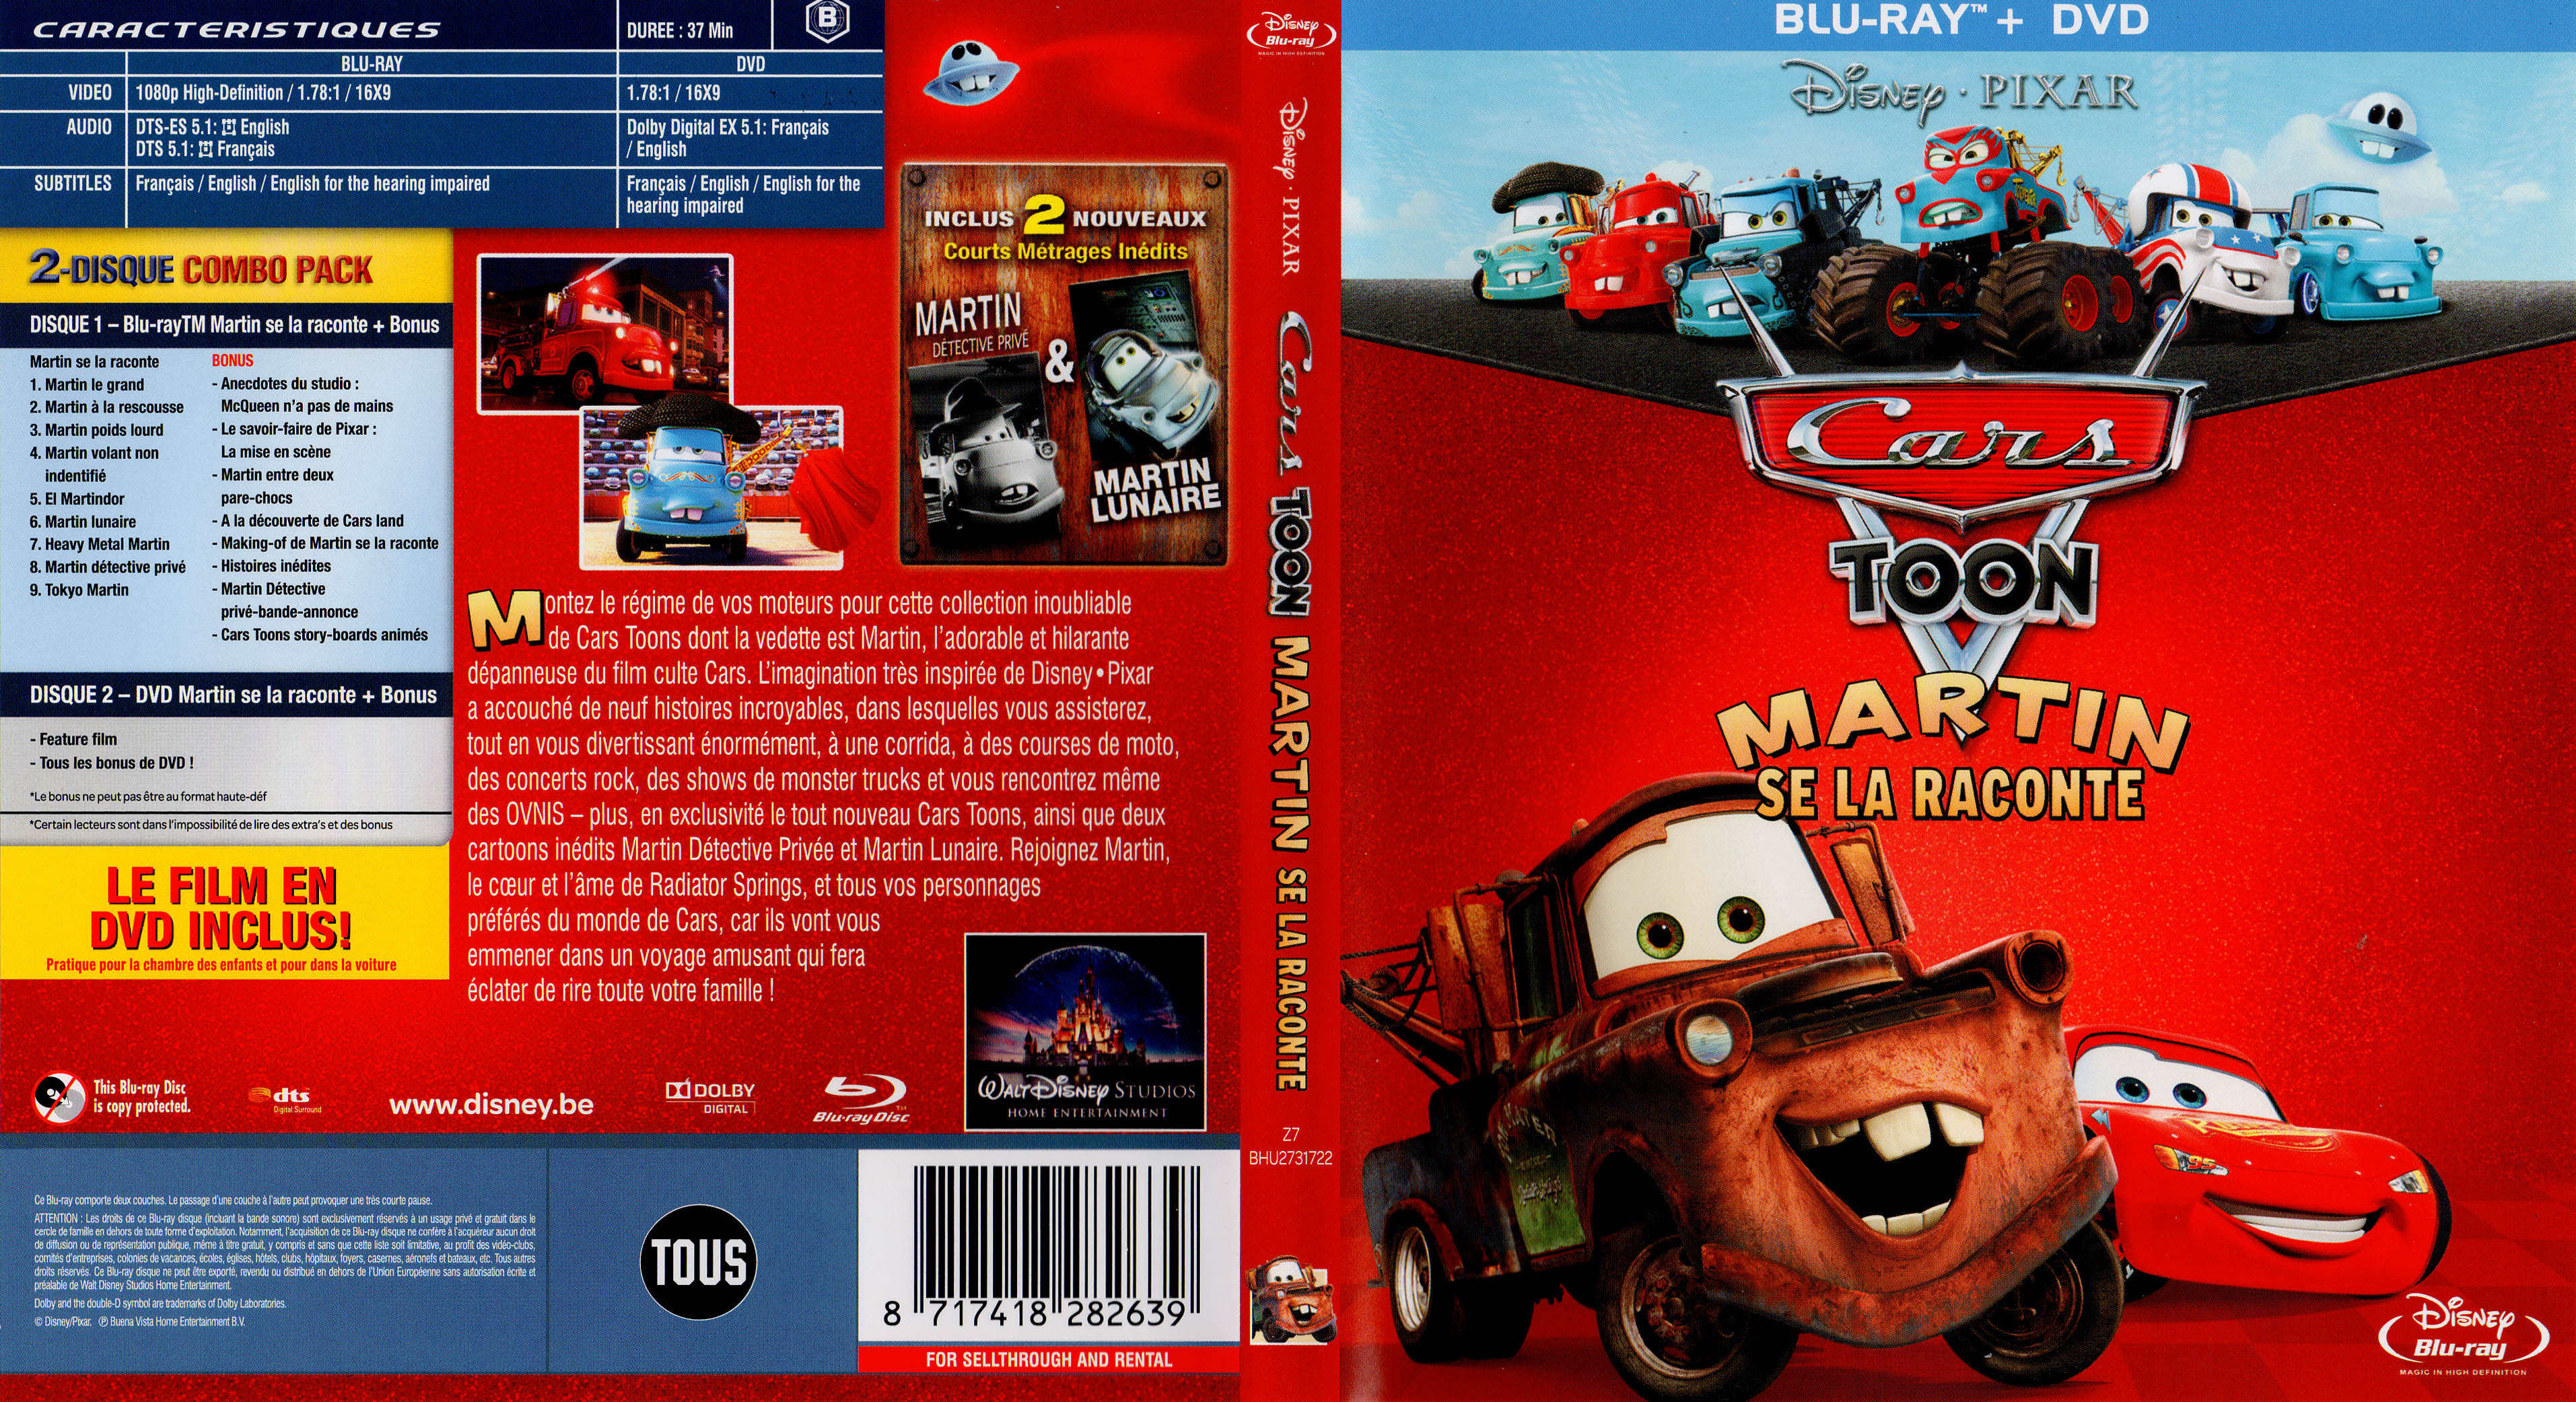 Jaquette DVD de Cars toon - Martin se la raconte (BLU-RAY) - Cinéma Passion